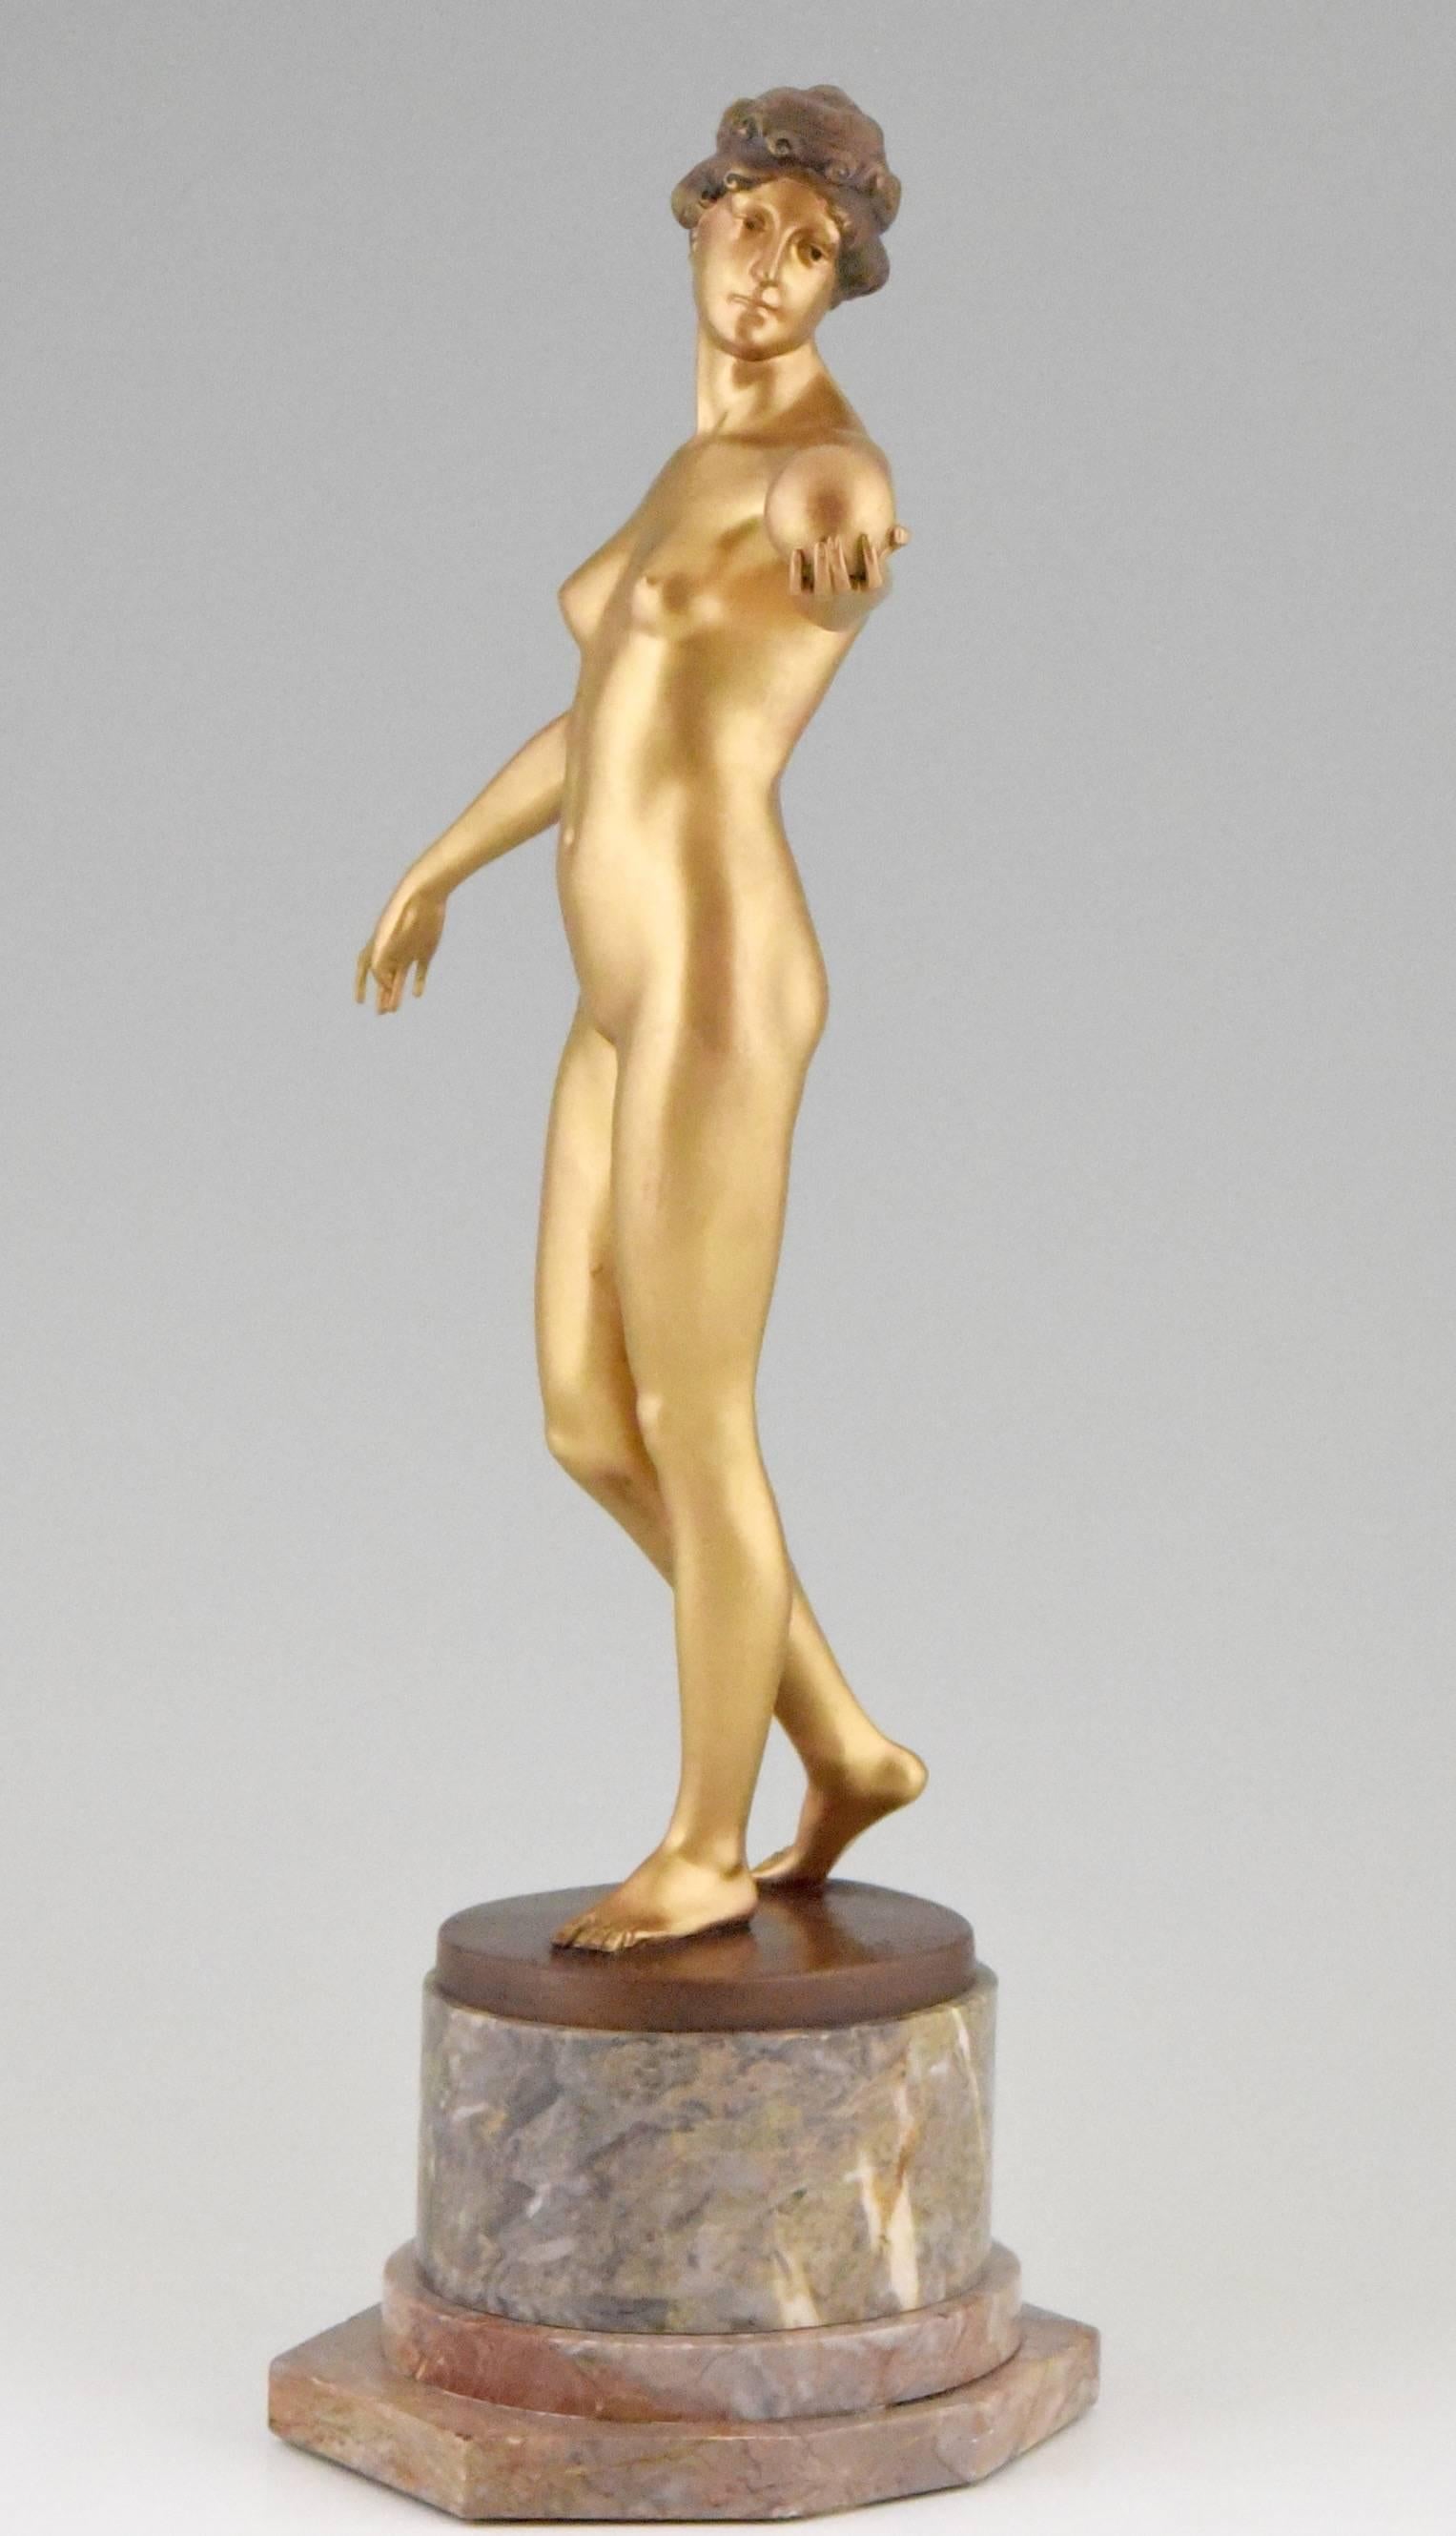 German Art Nouveau bronze sculpture of a nude holding a ball by Hans Keck 1900